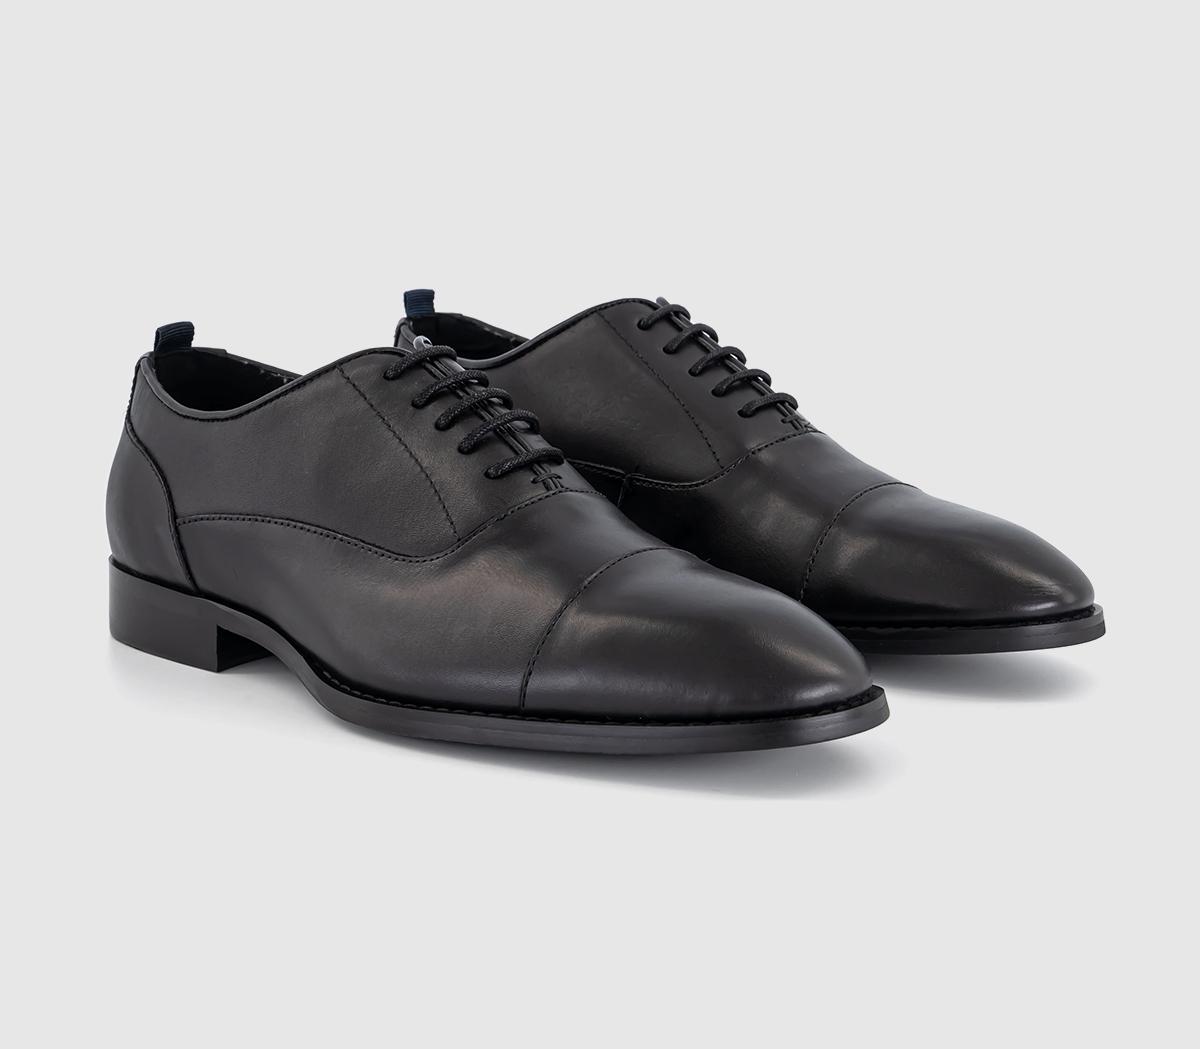 OFFICE Mens Montana Toecap Oxford Shoes Black Leather, 11